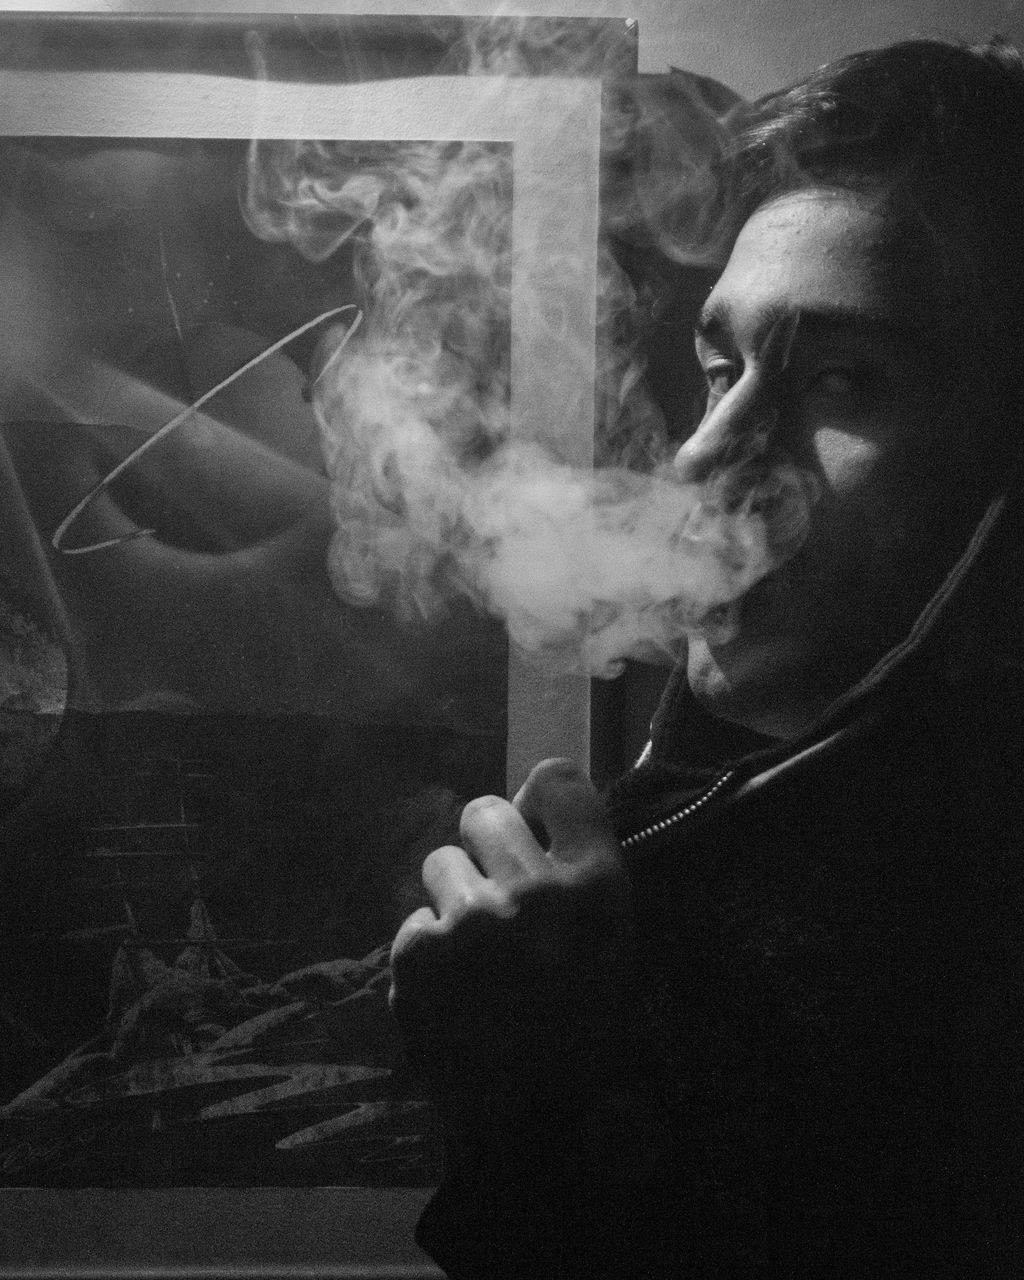 PORTRAIT OF MAN SMOKING CIGARETTE ON FLOOR